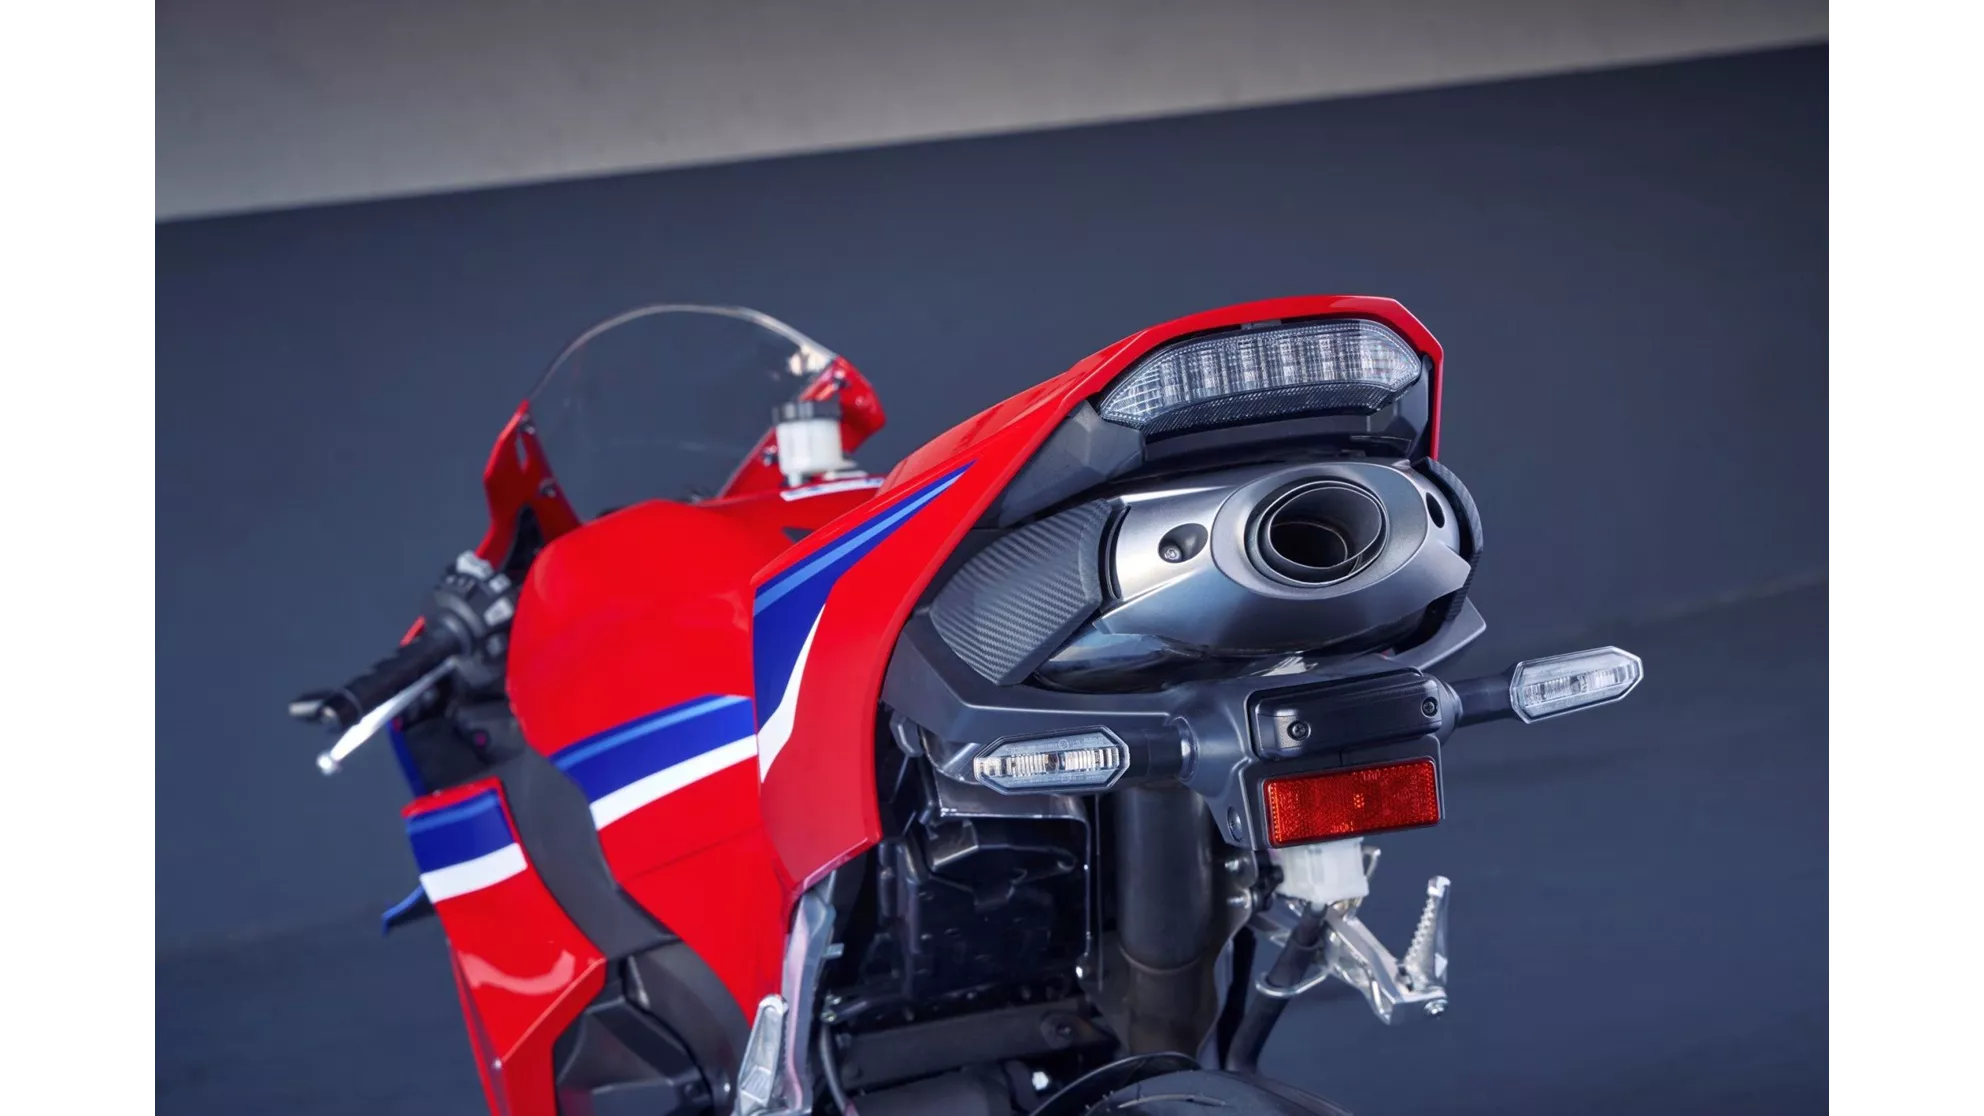 Honda CBR600RR - Image 1